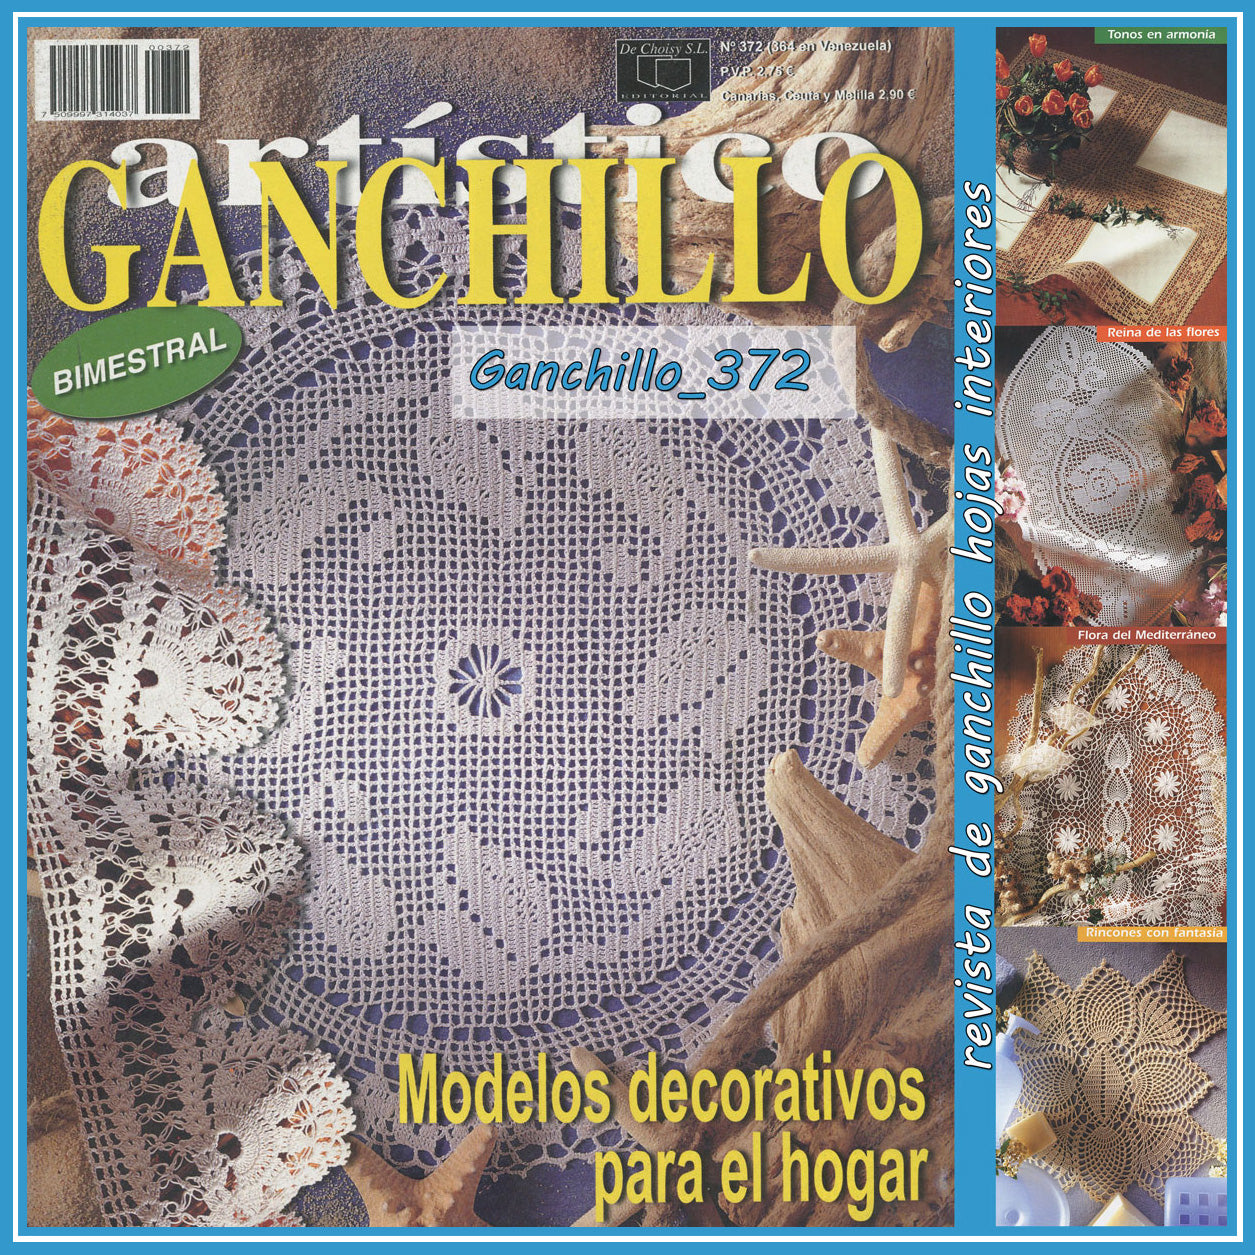 GANCHILLO crochet Magazines by Artistico Y Puntorama 